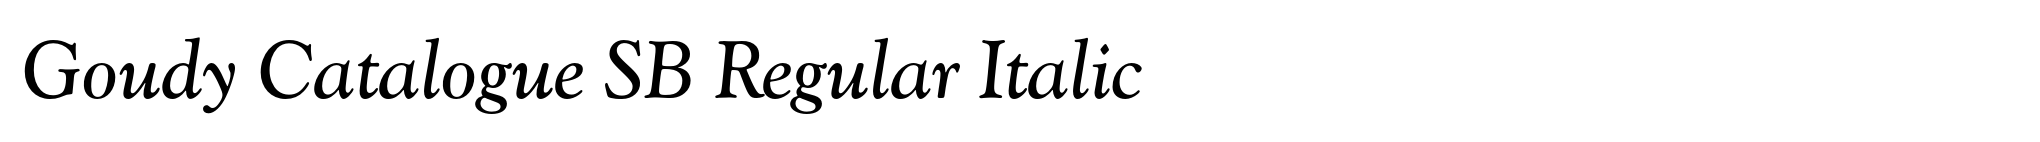 Goudy Catalogue SB Regular Italic image